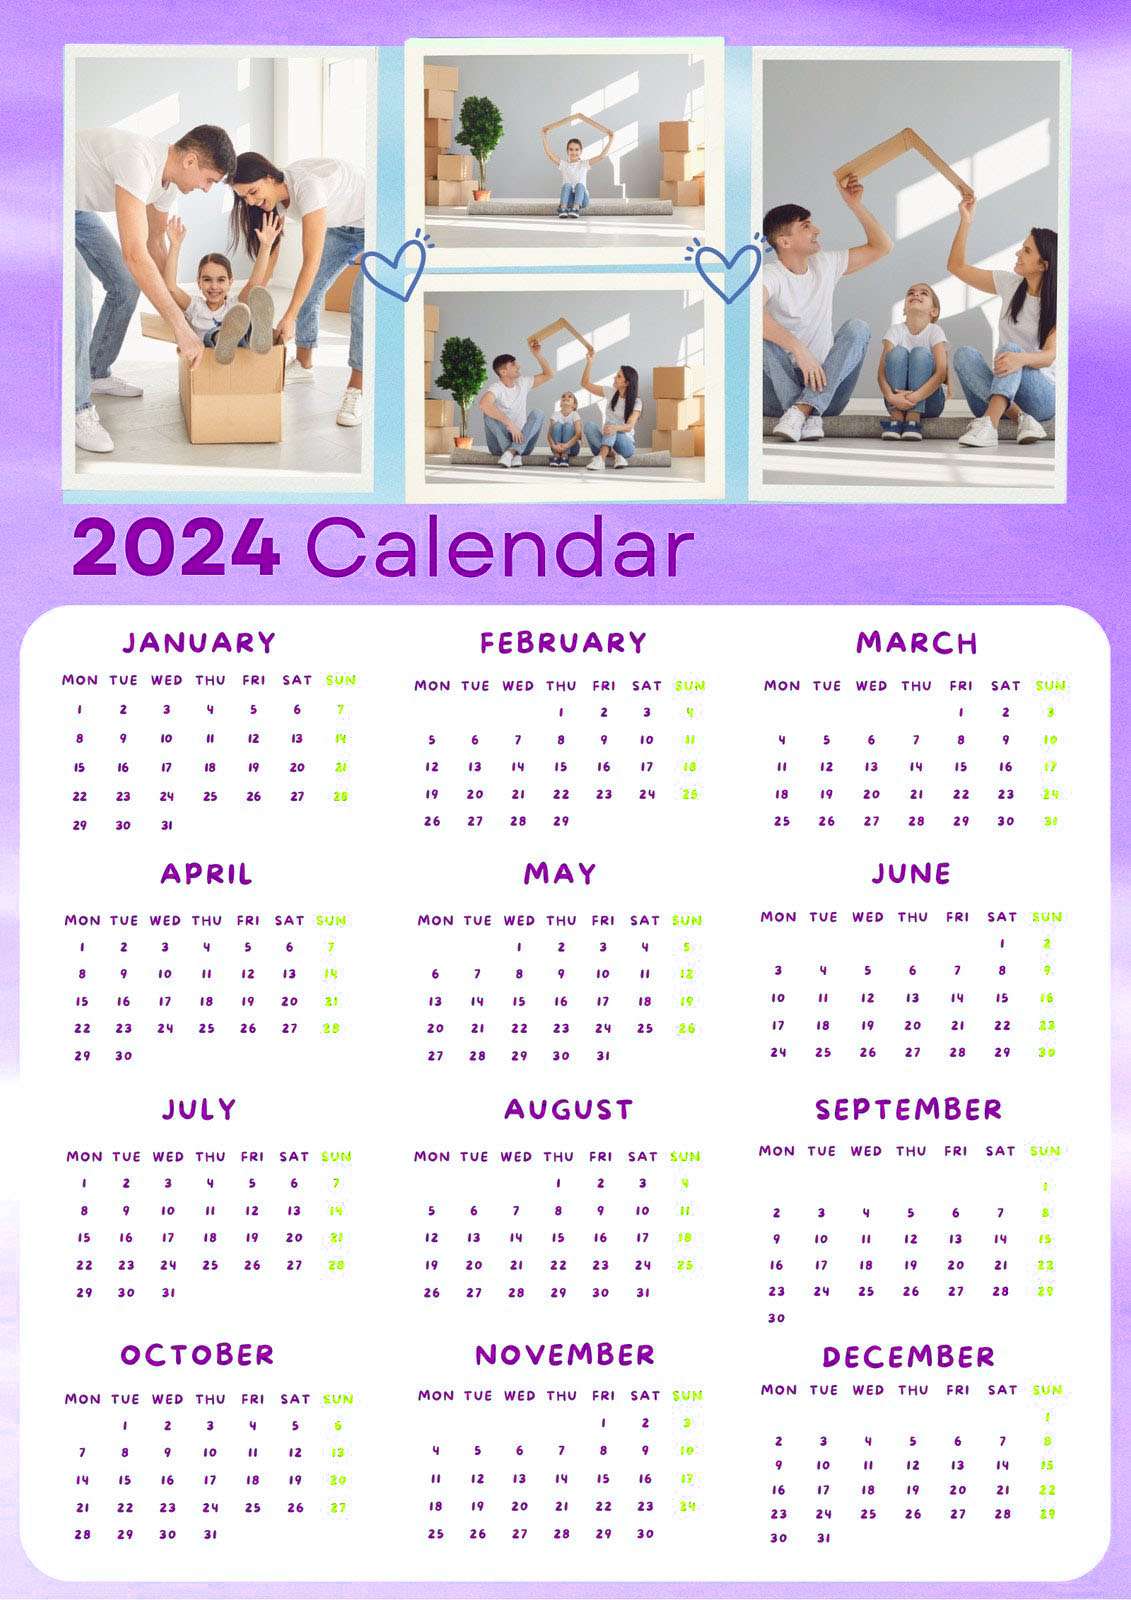 2024 Calendar Calendar Strategy